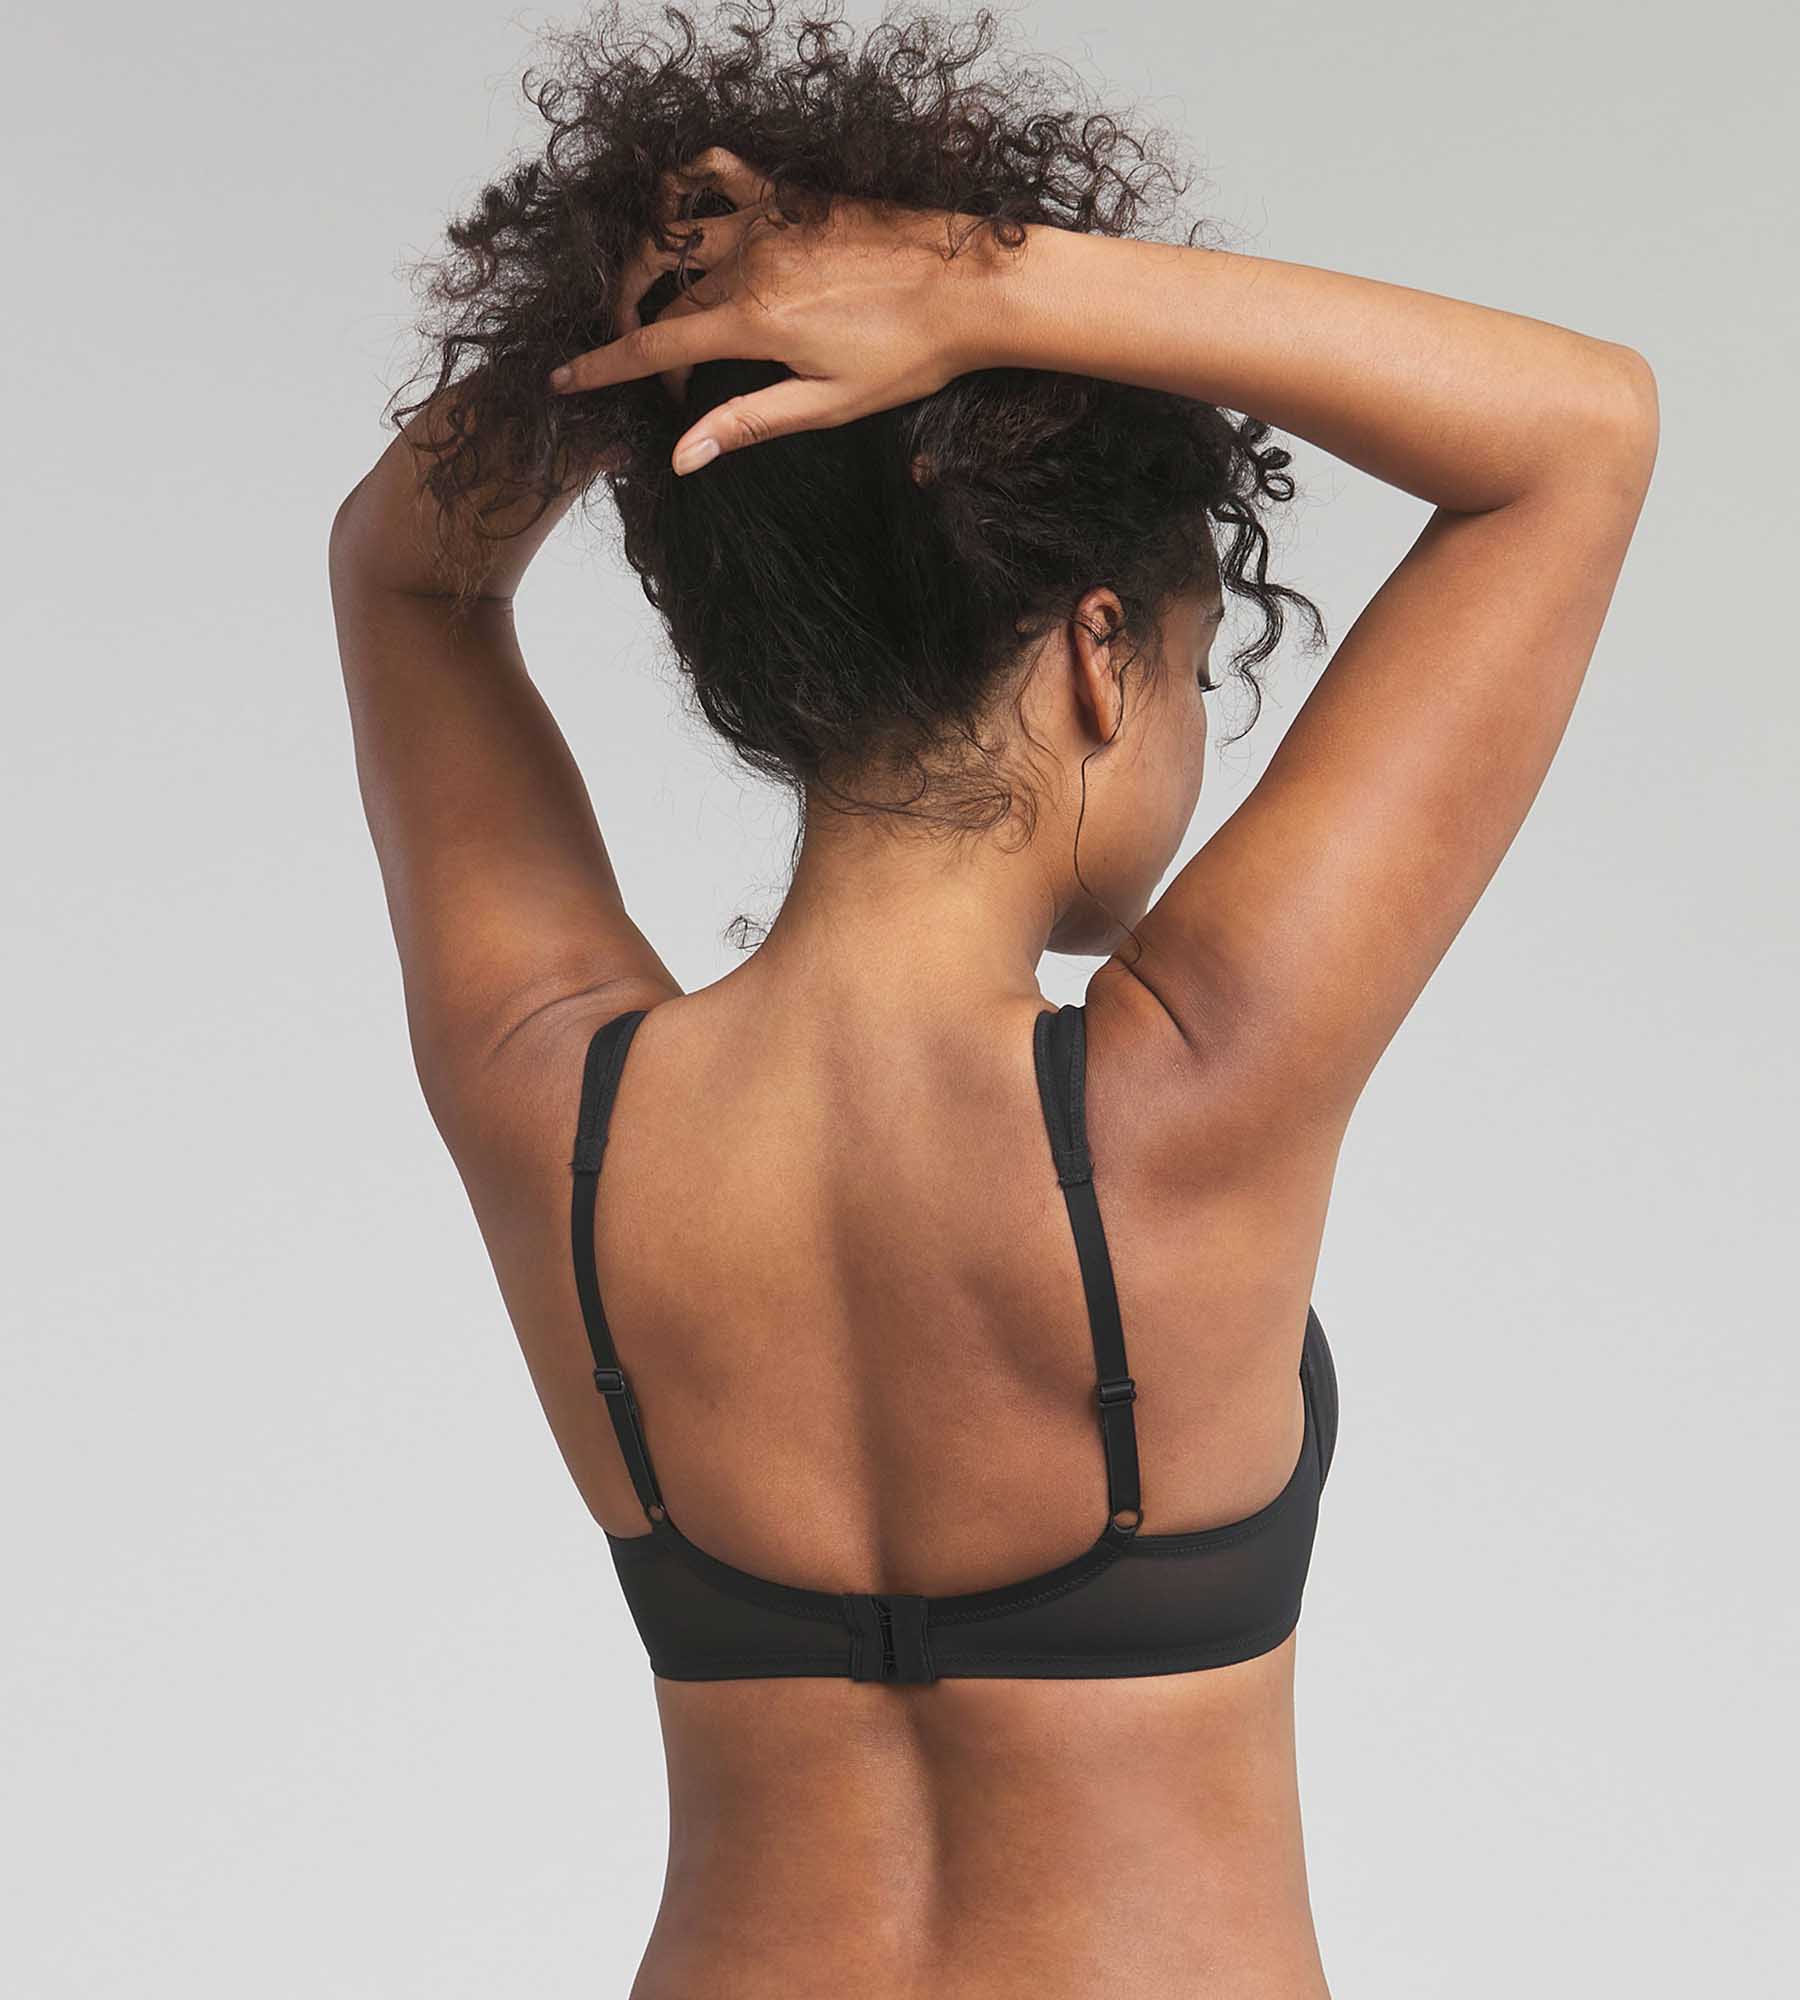 Underwired bra in black - Expert in Silhouette, , PLAYTEX